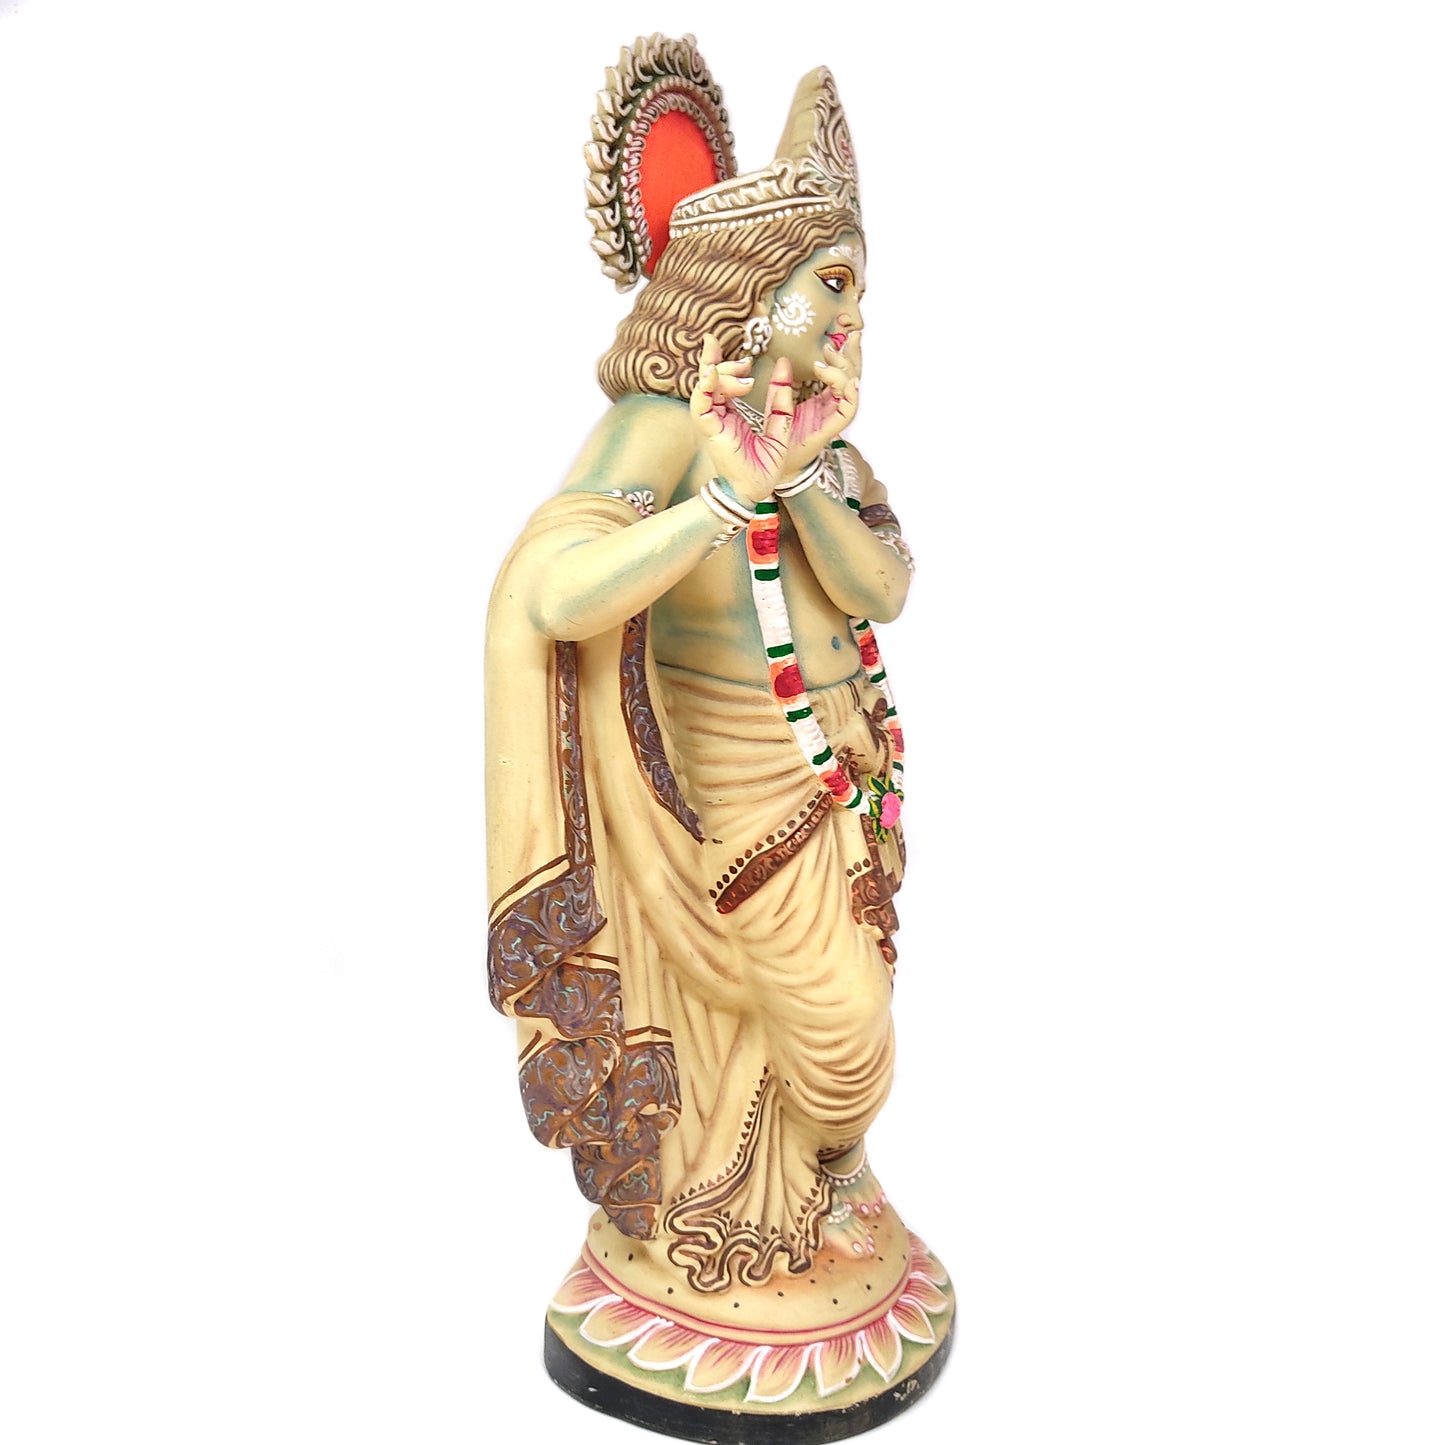 19.75" Terracotta Krishna India God Handmade Sculpture Figurine Clay Statue